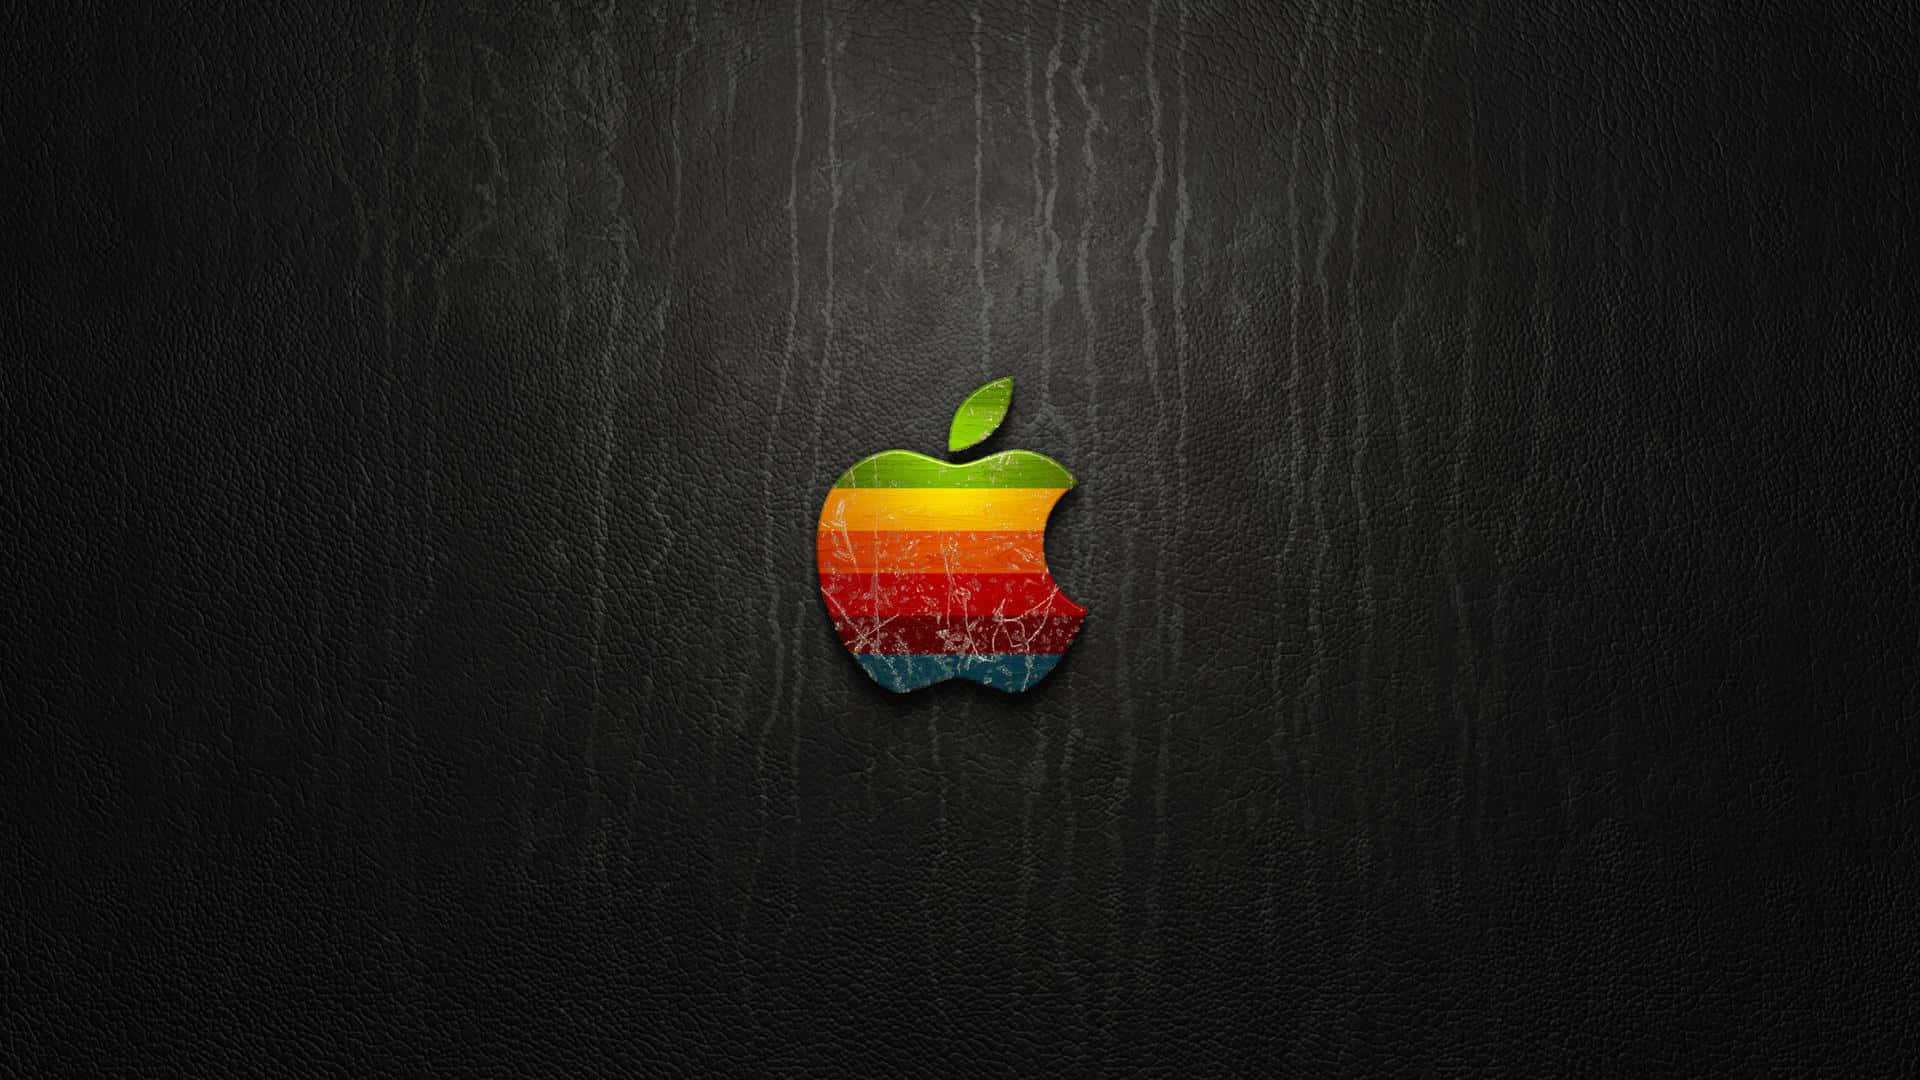 Retro Apple Logo Wallpaper